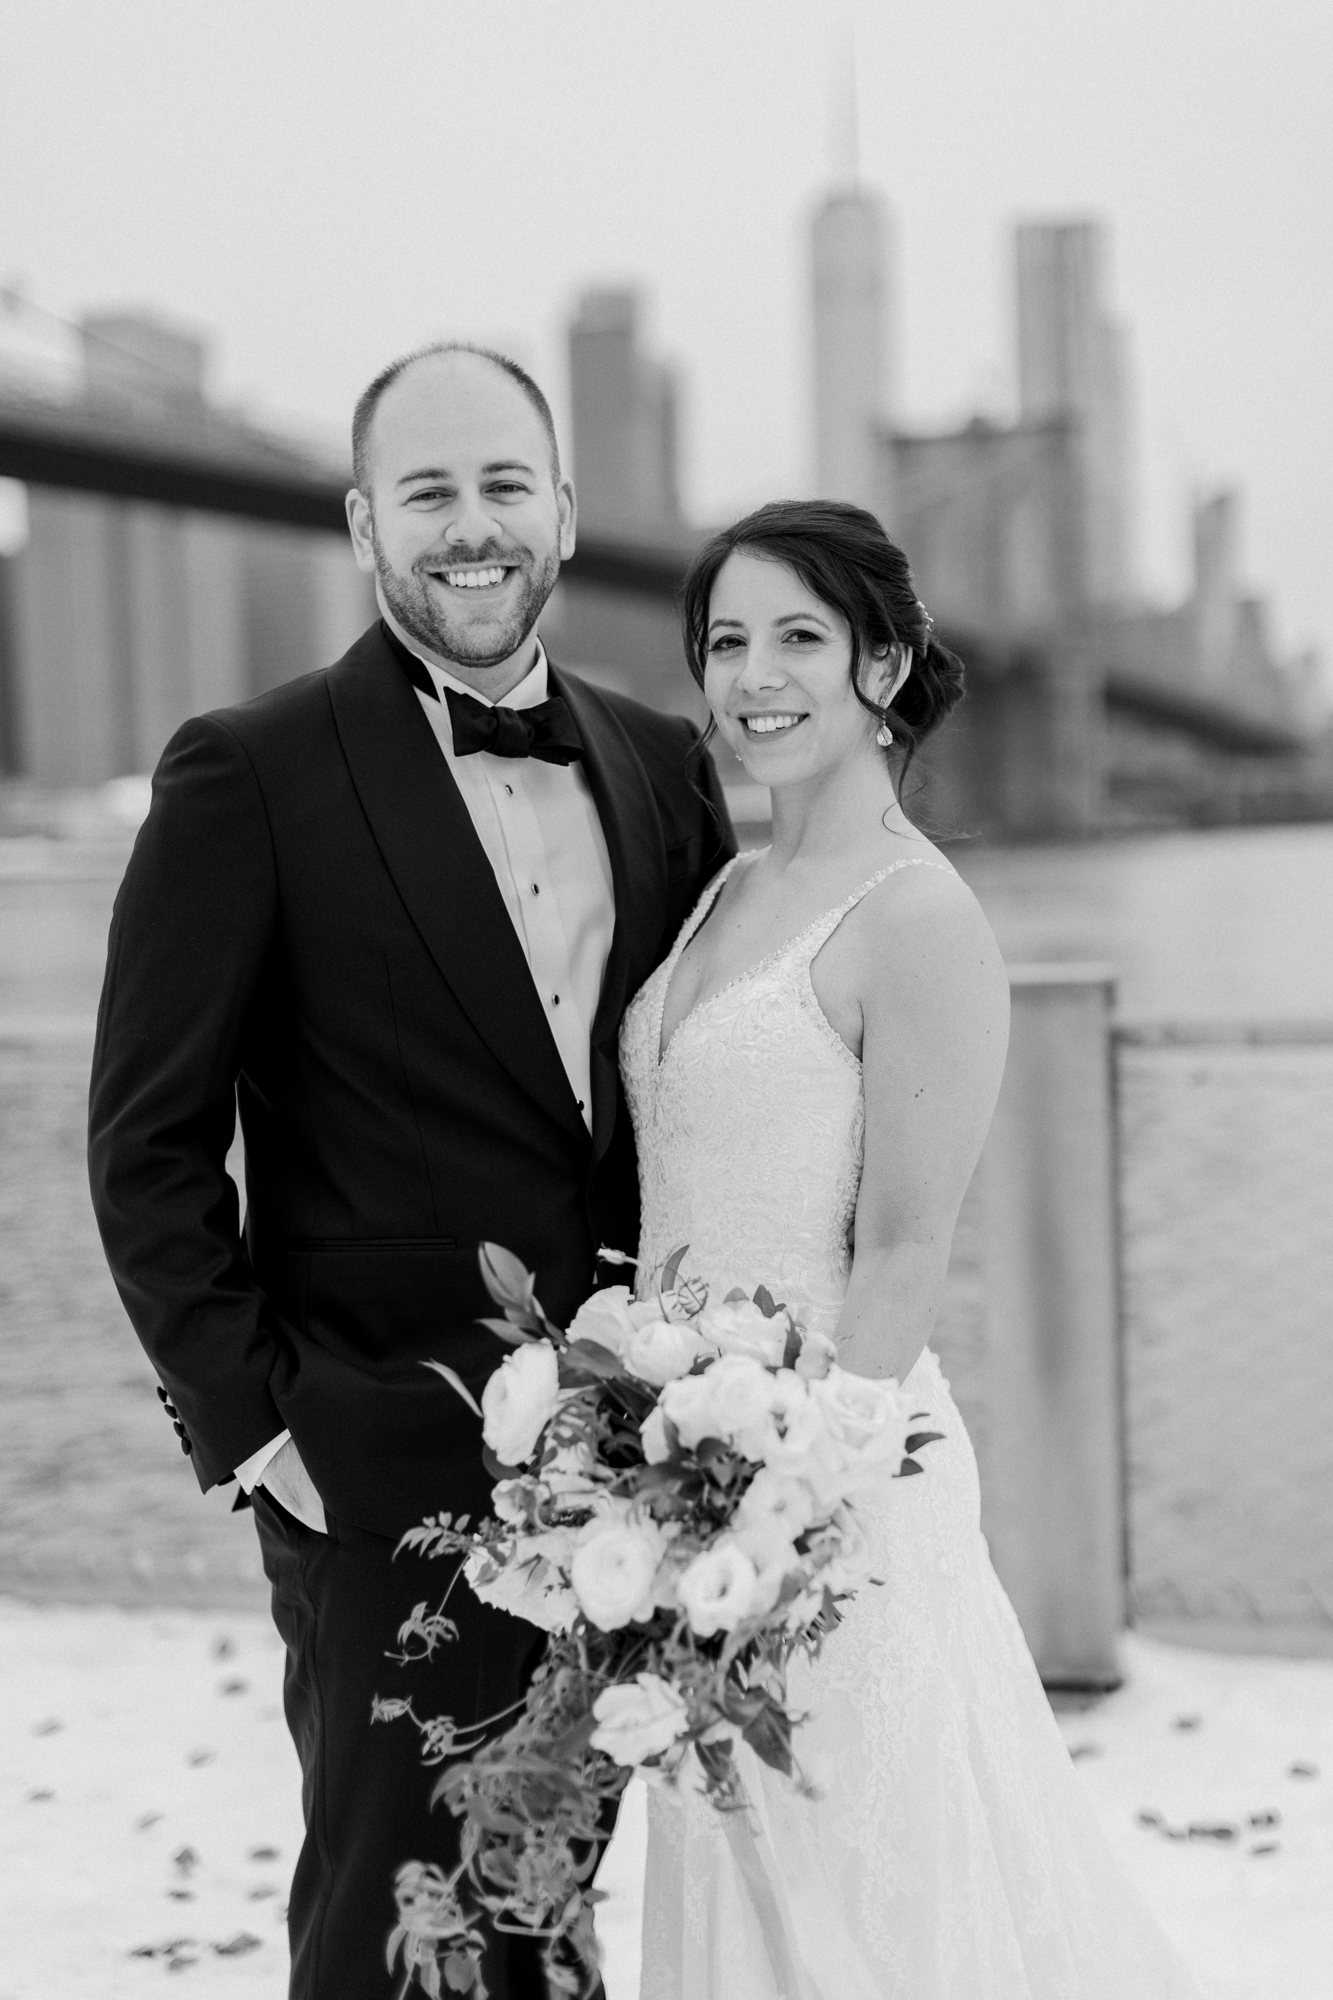 Gorgeous winter wedding photos in Brooklyn Bridge Park, NYC